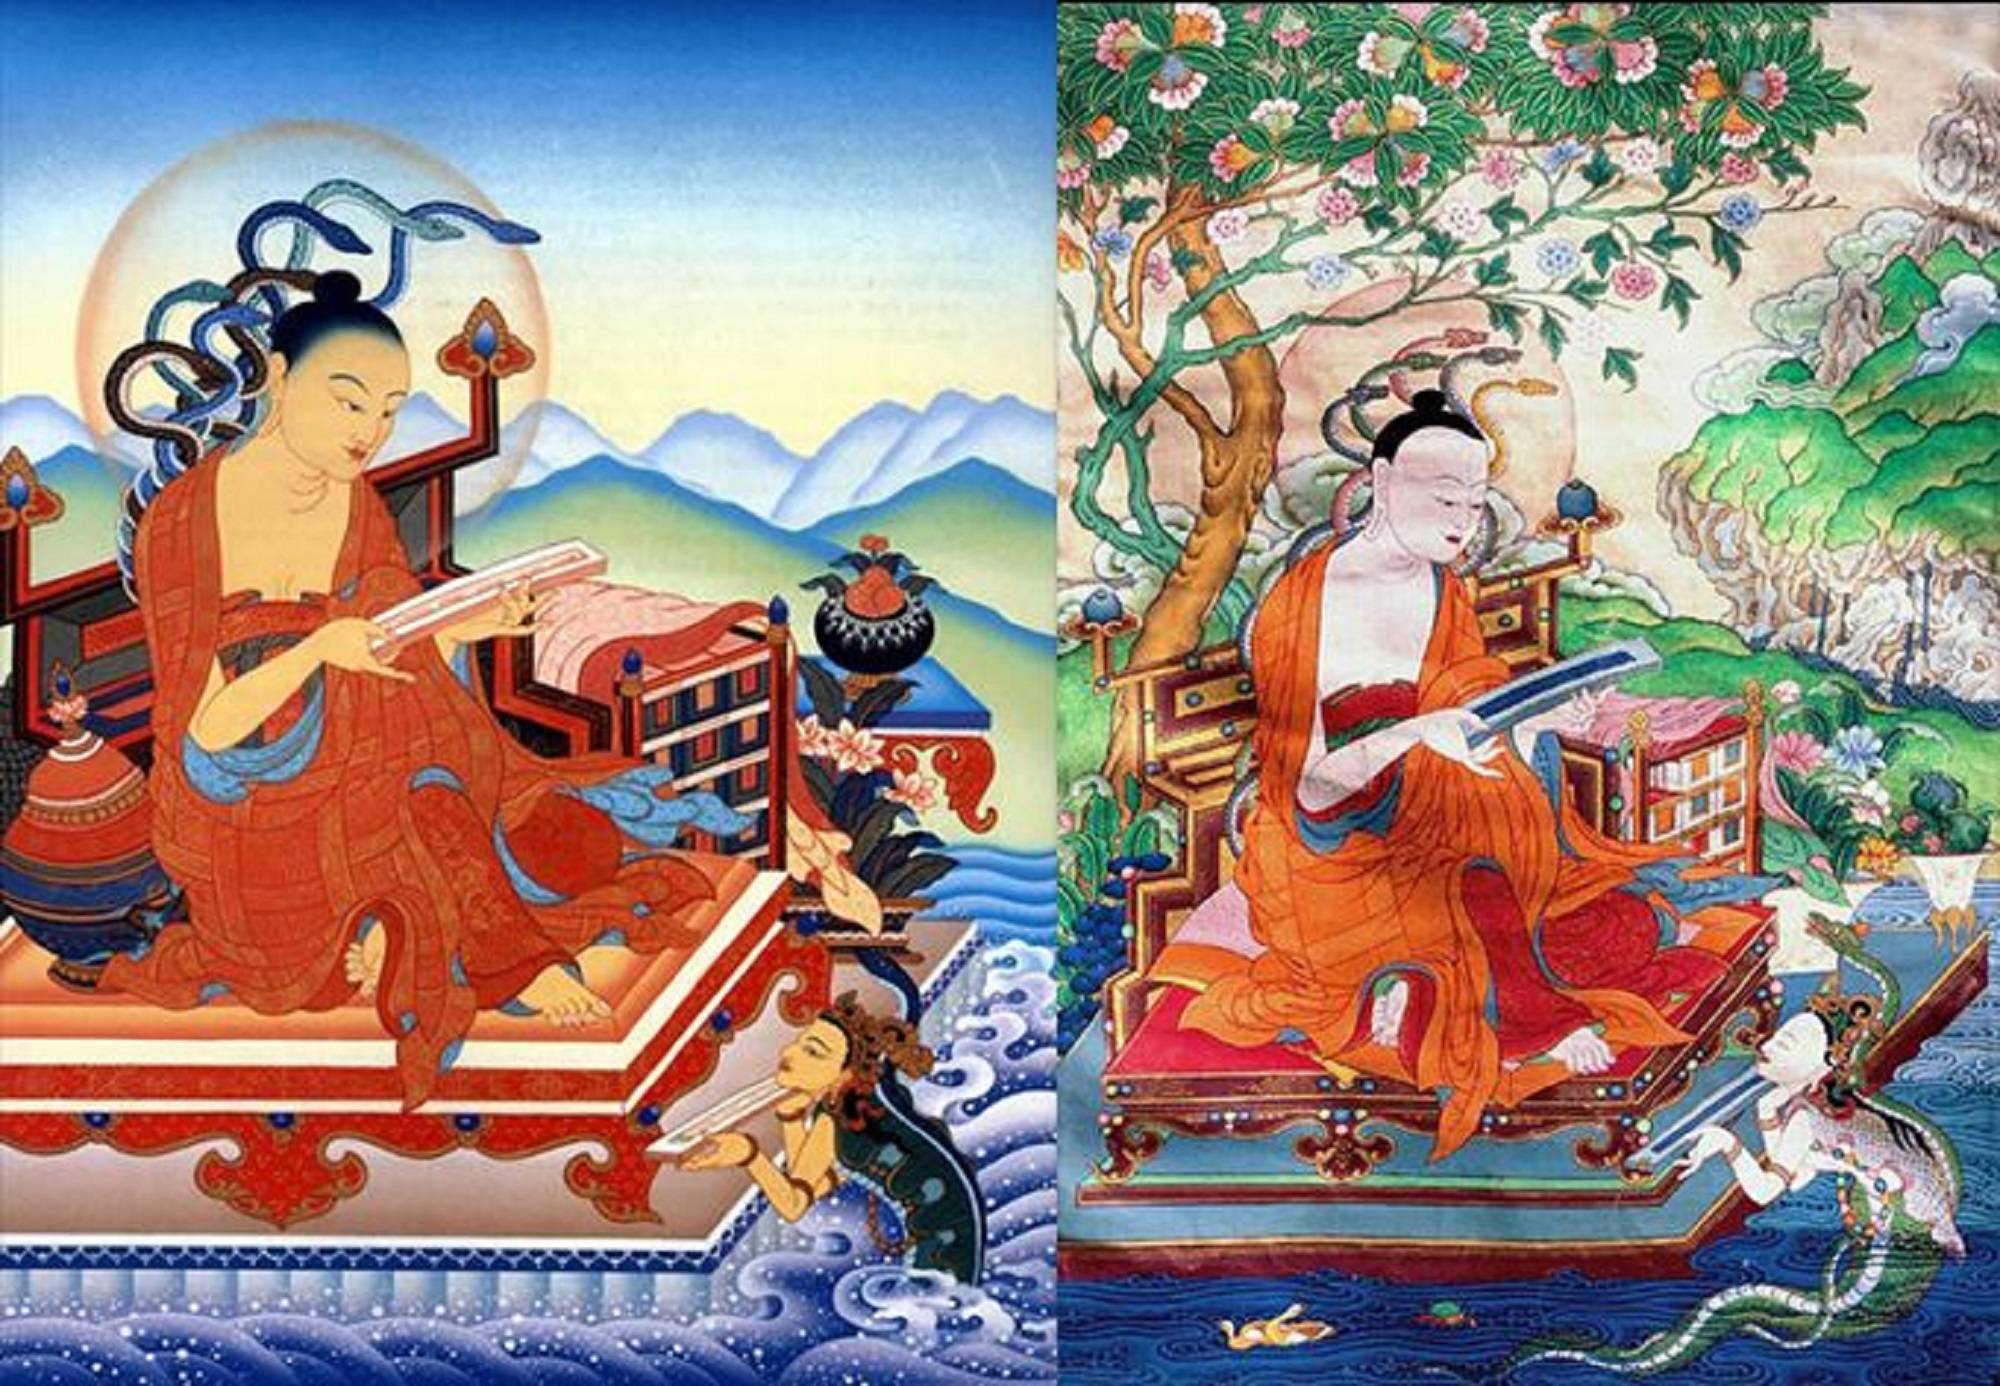 Nagarjuna, cel mai important gânditor budist după Gautama Buddha